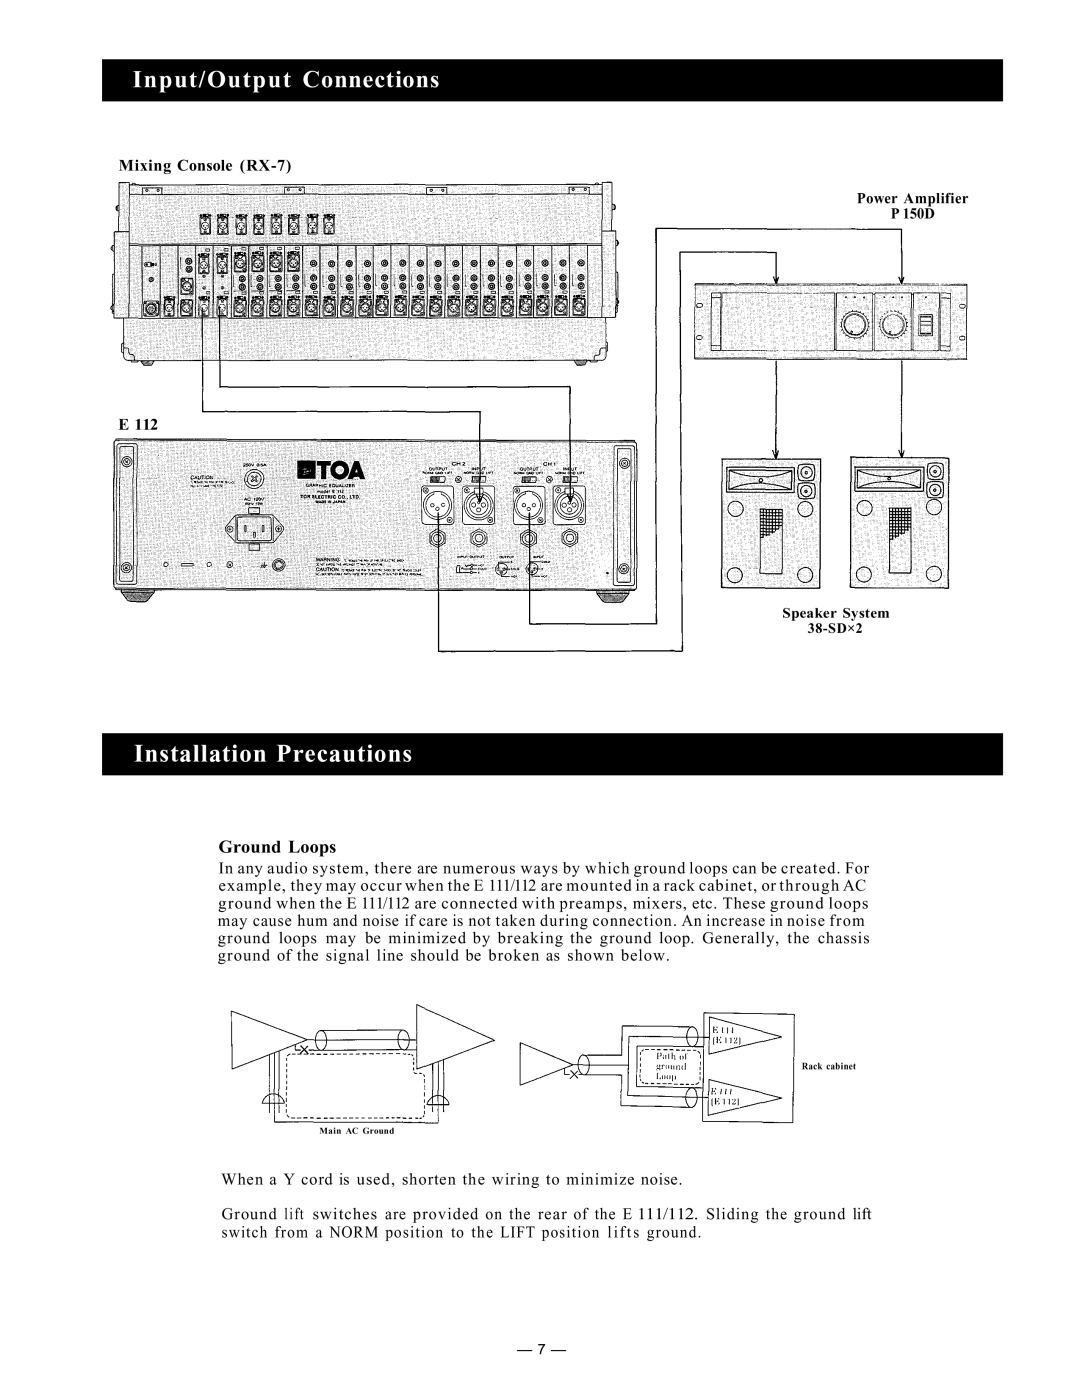 Viking Electronics E111 Installation Precautions, Input/Output Connections, Mixing Console RX-7 Power Amplifier P 150D E 